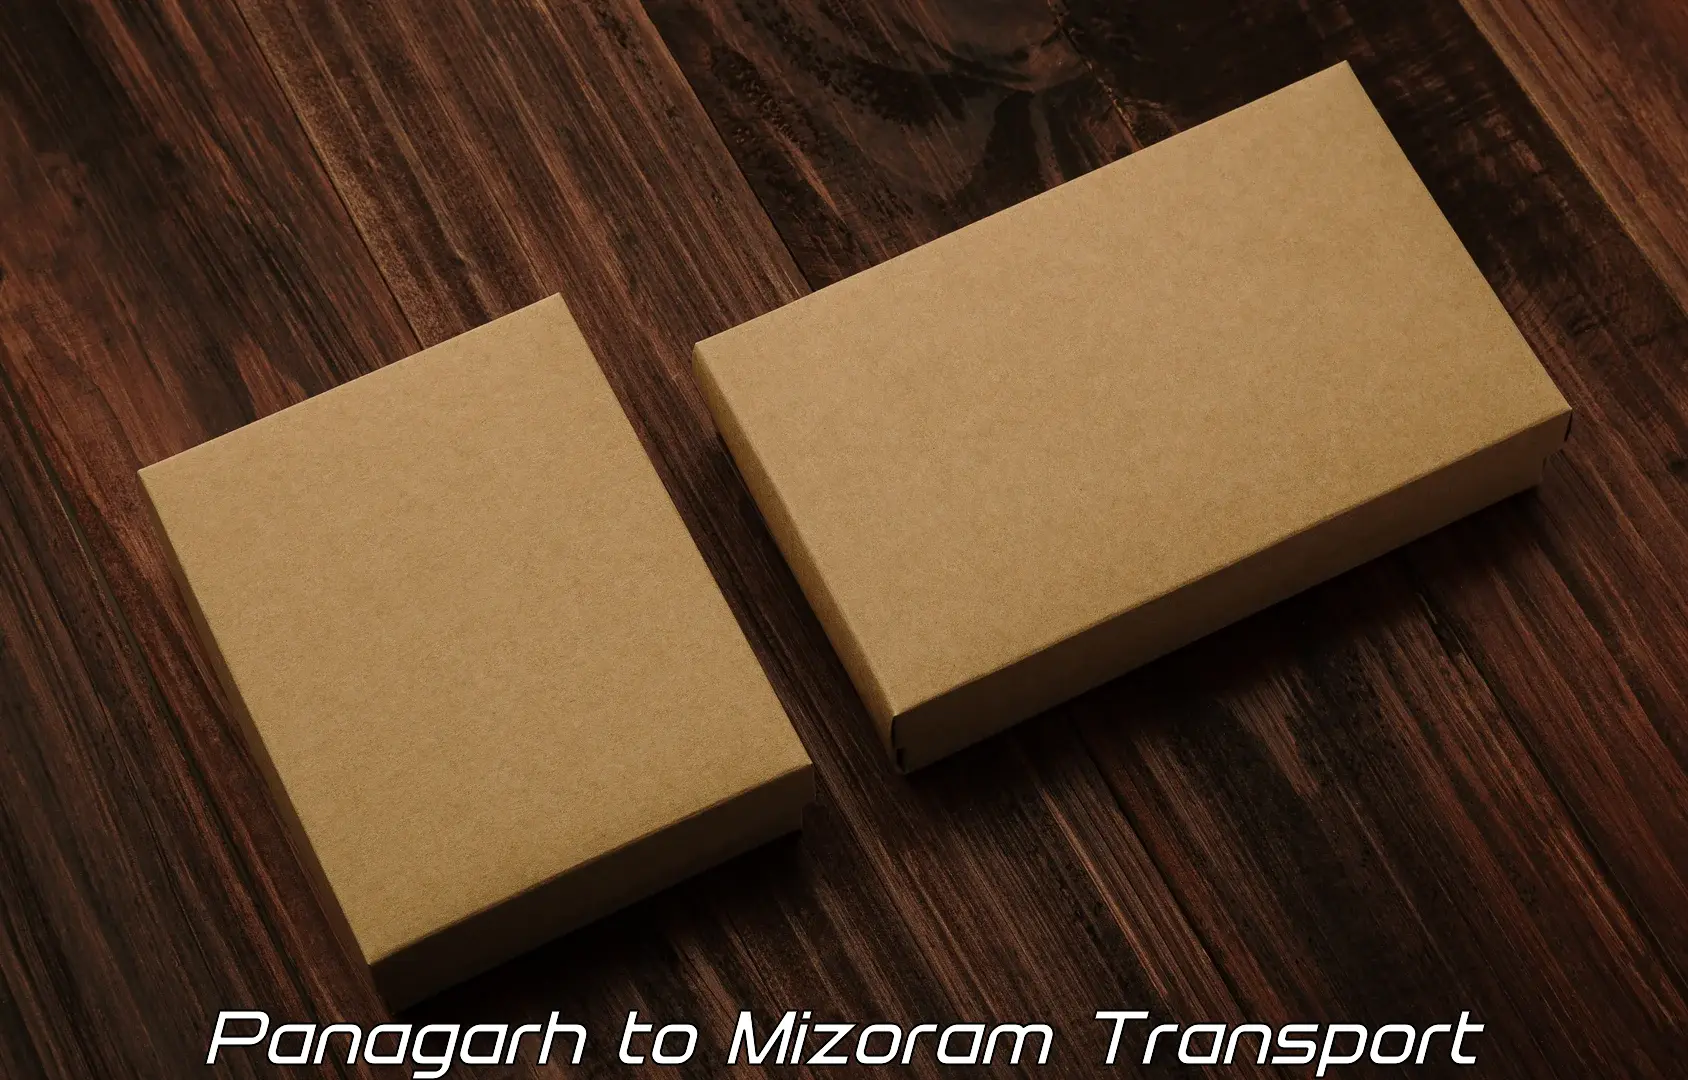 Container transportation services Panagarh to Mizoram